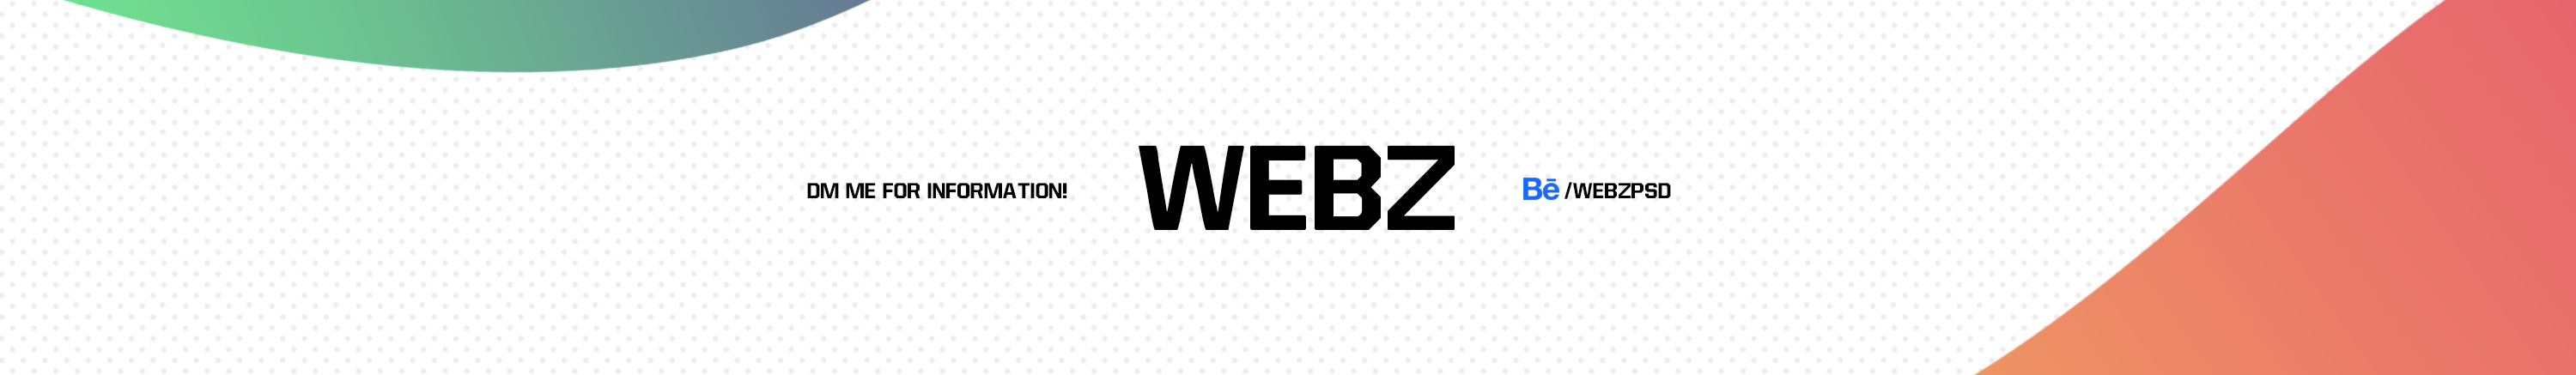 Webz Designs profil başlığı